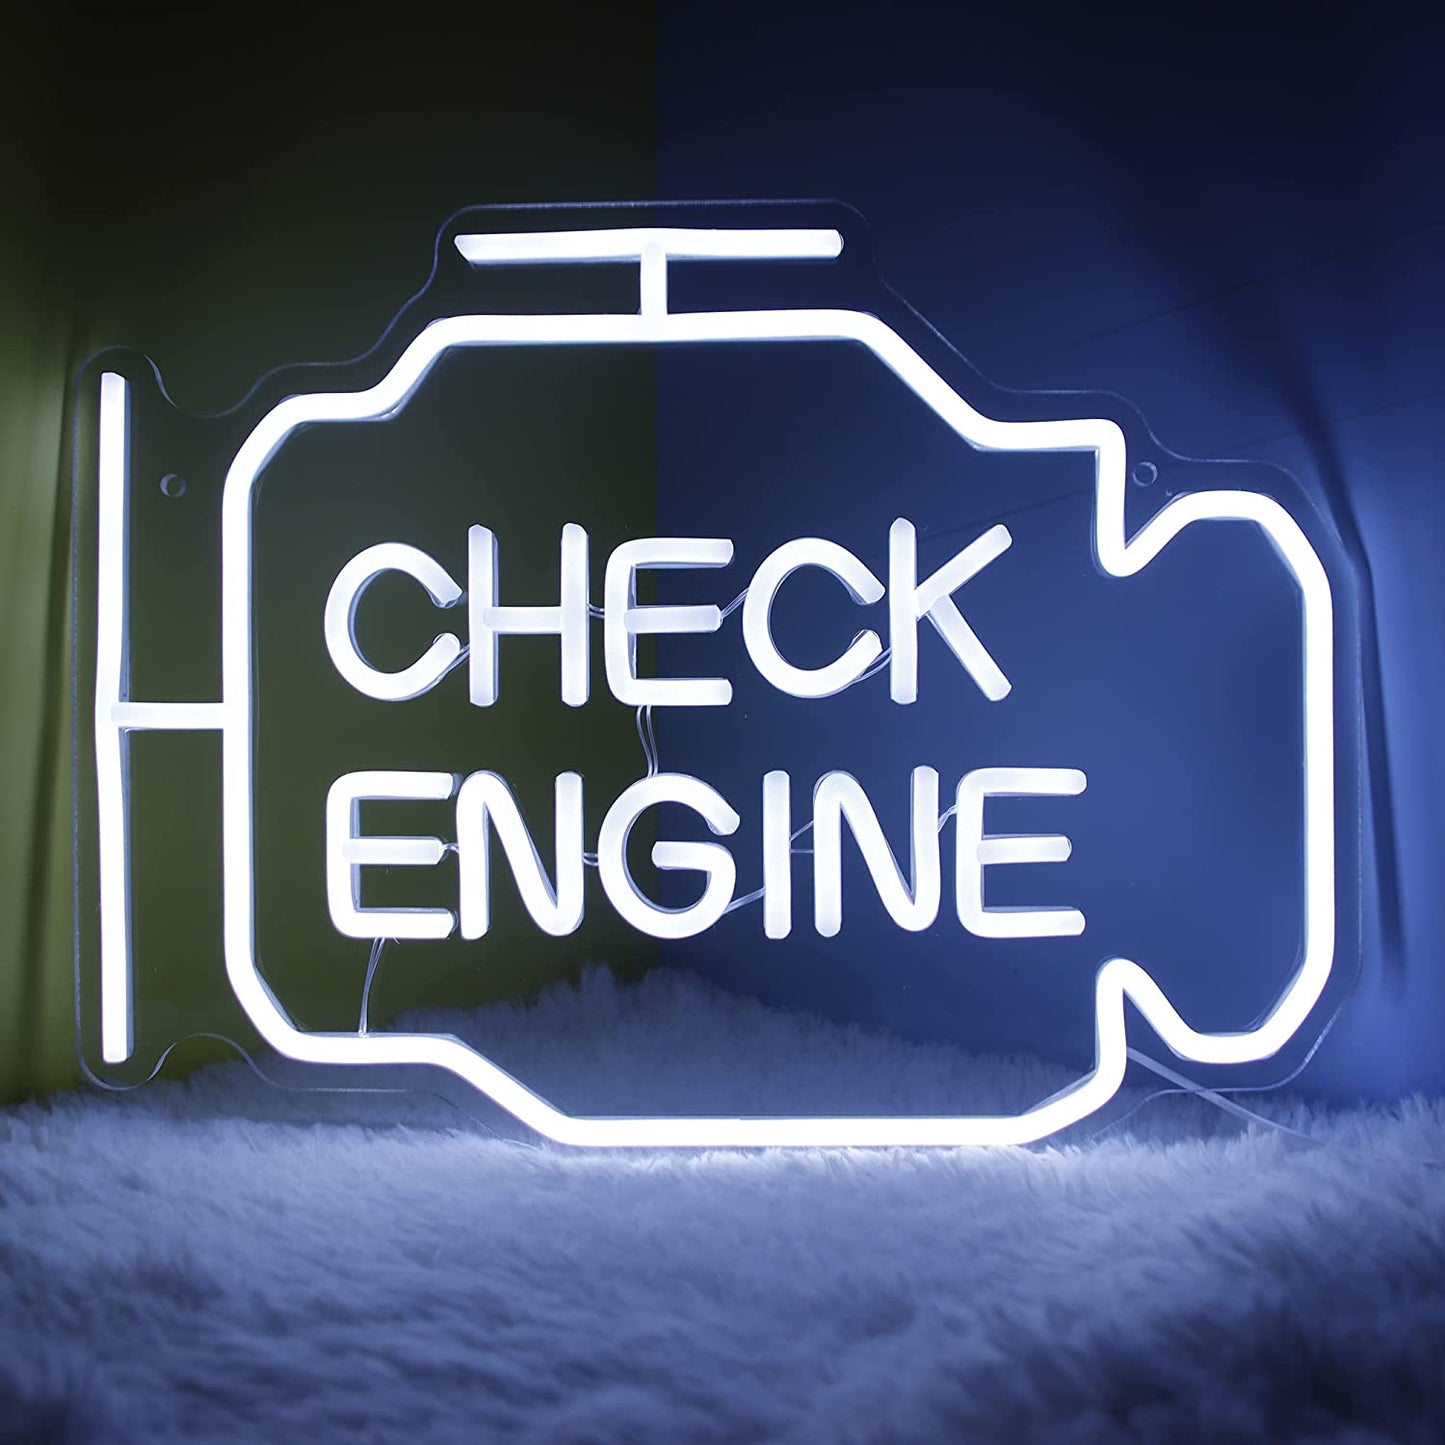 Check Engine Neon Light